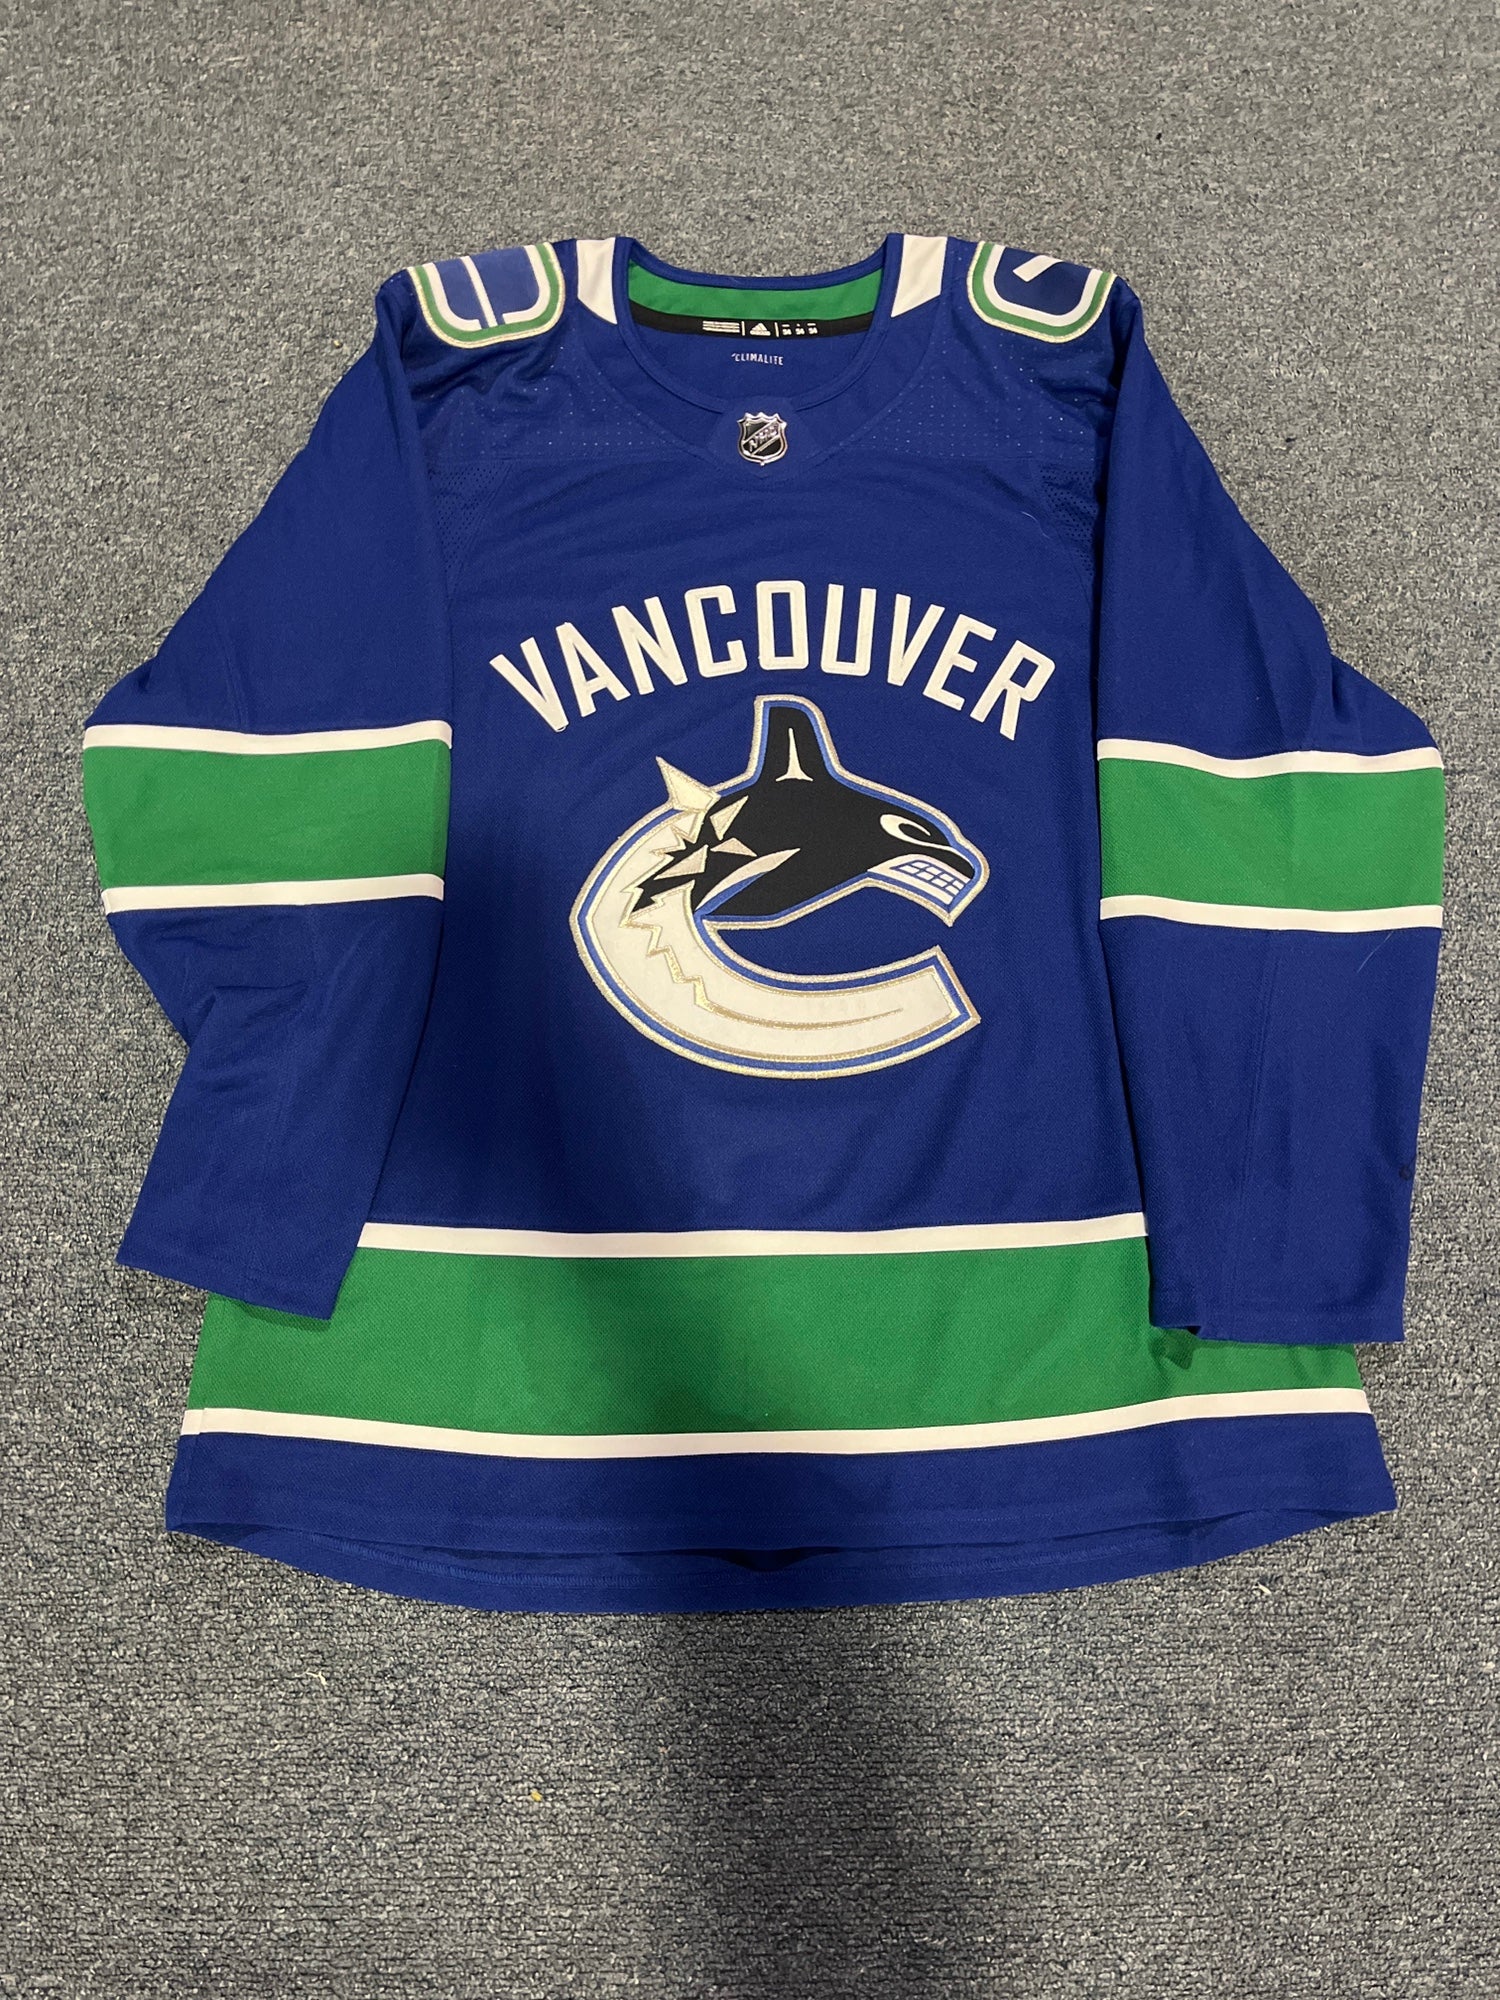 NHL adidas Vancouver Canucks Away Jersey Size 44(xs)